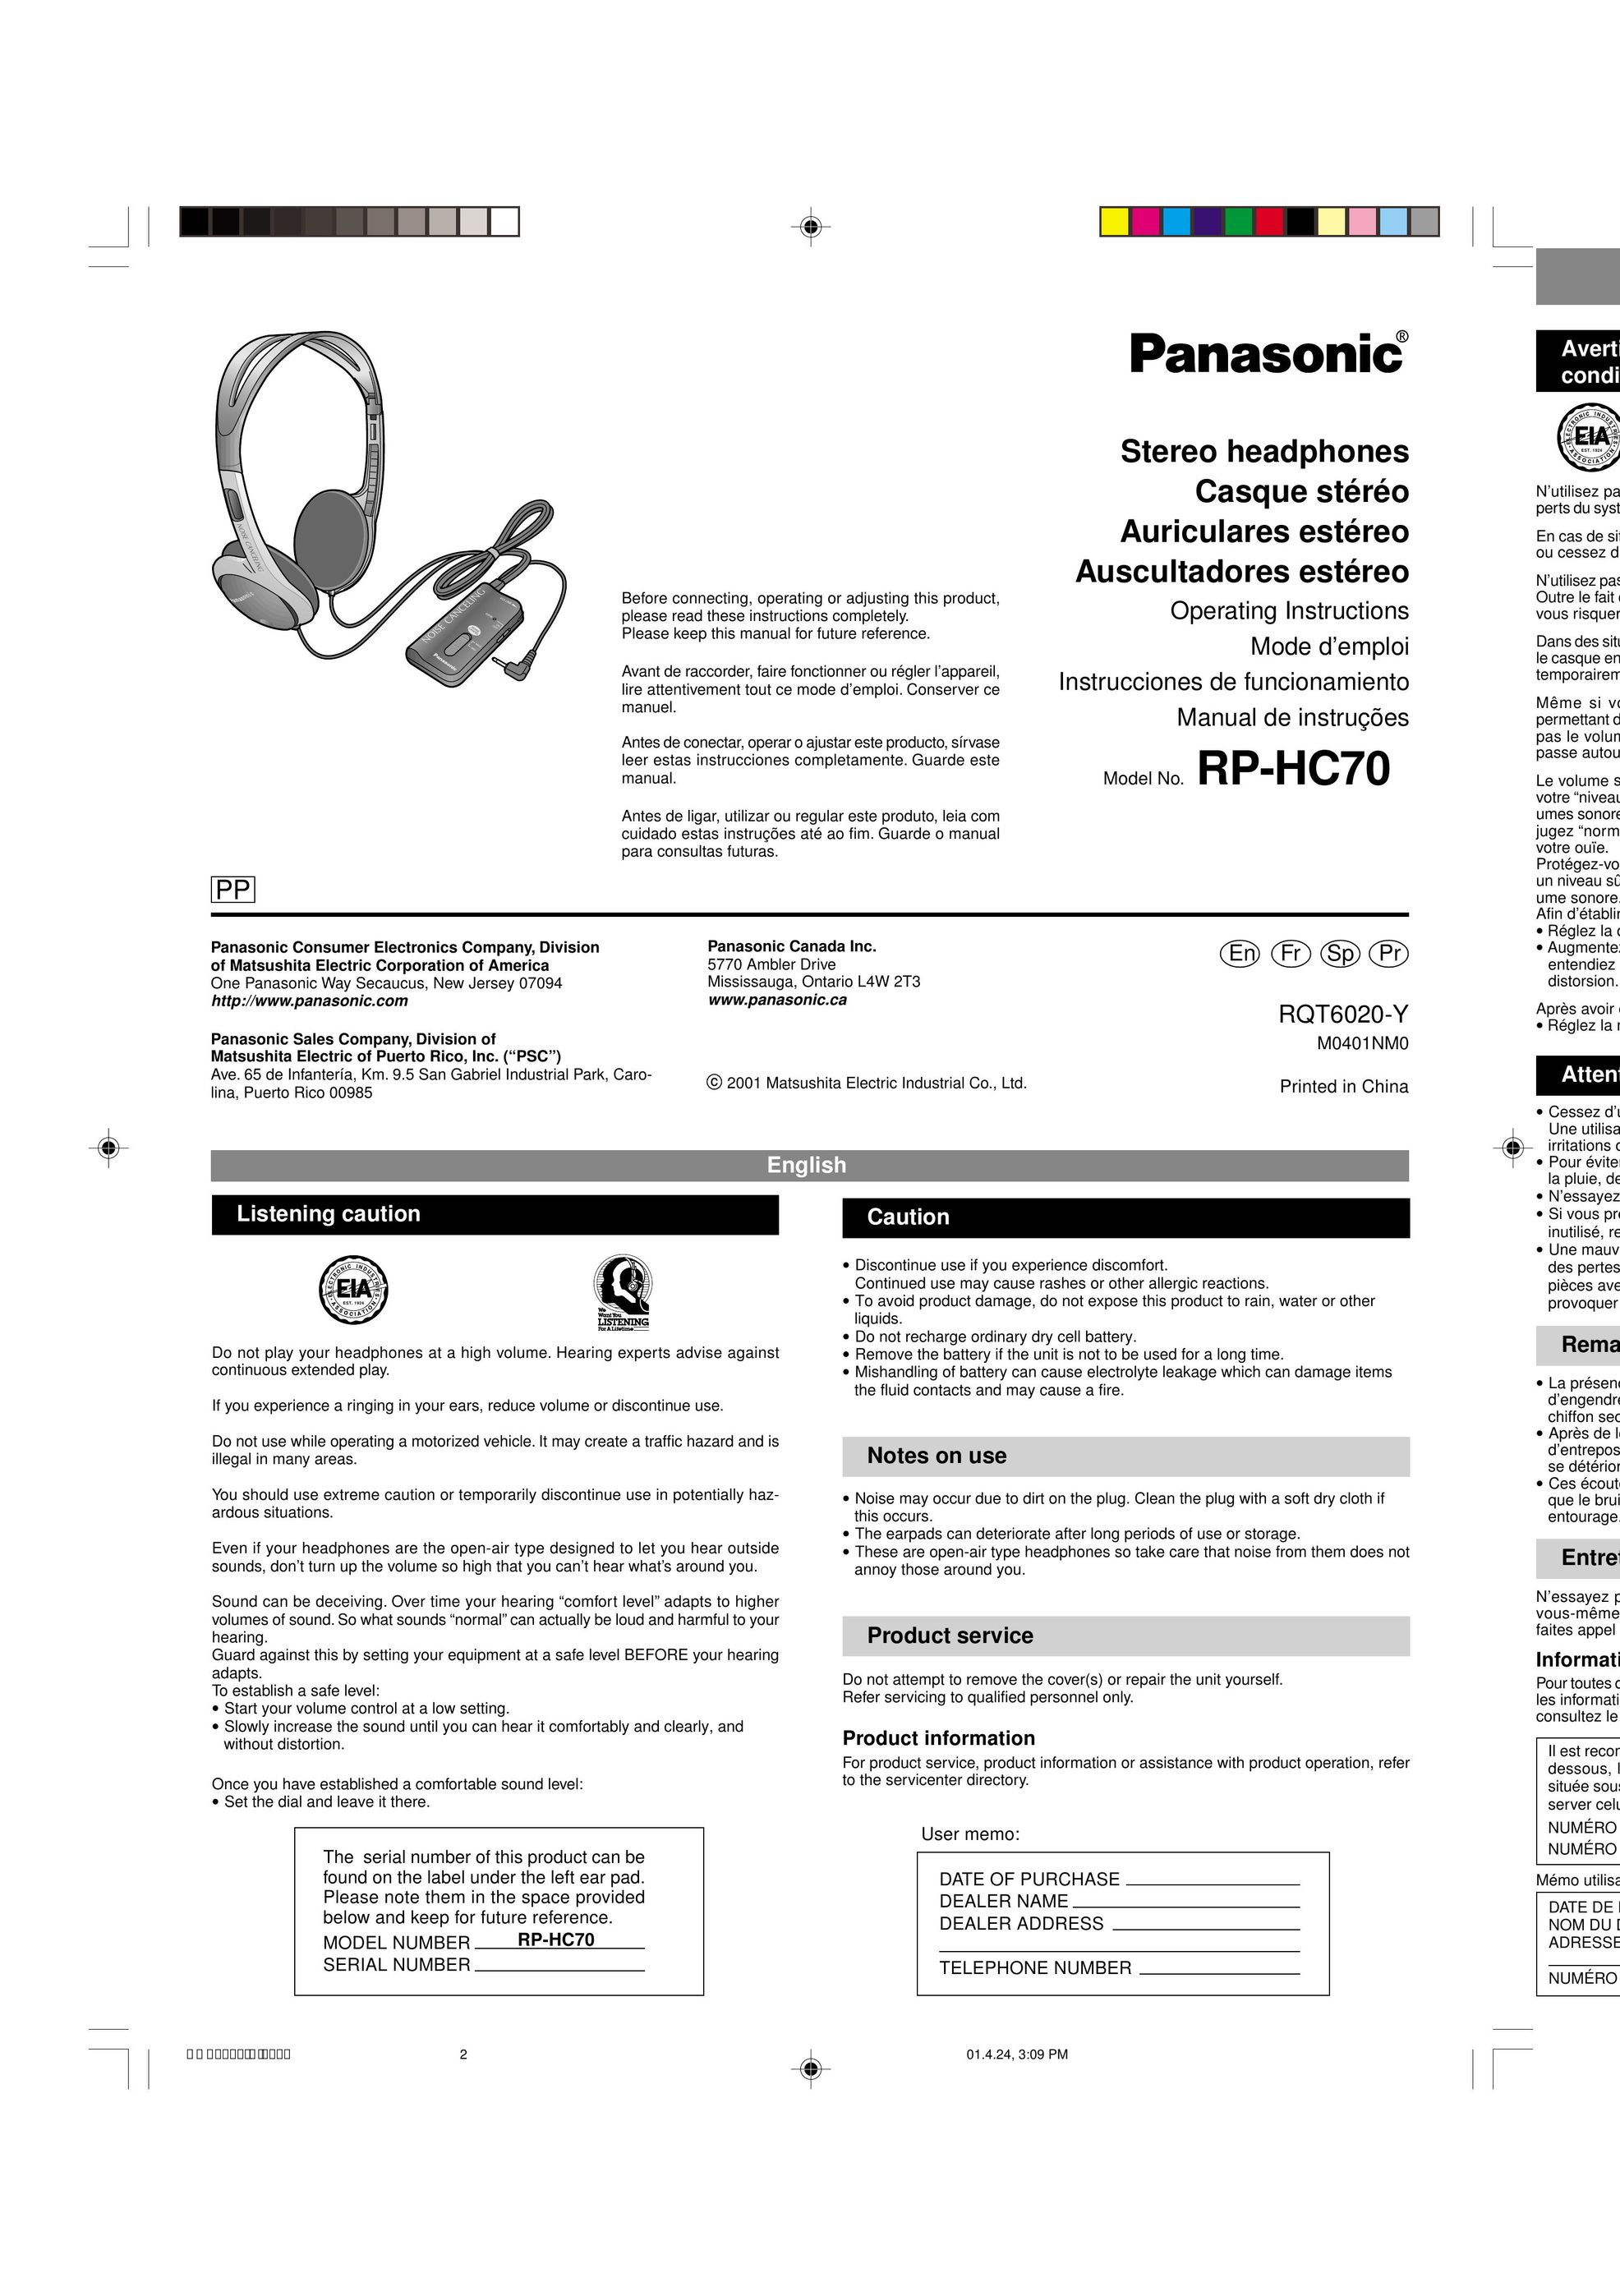 Panasonic RP-HC70 Headphones User Manual